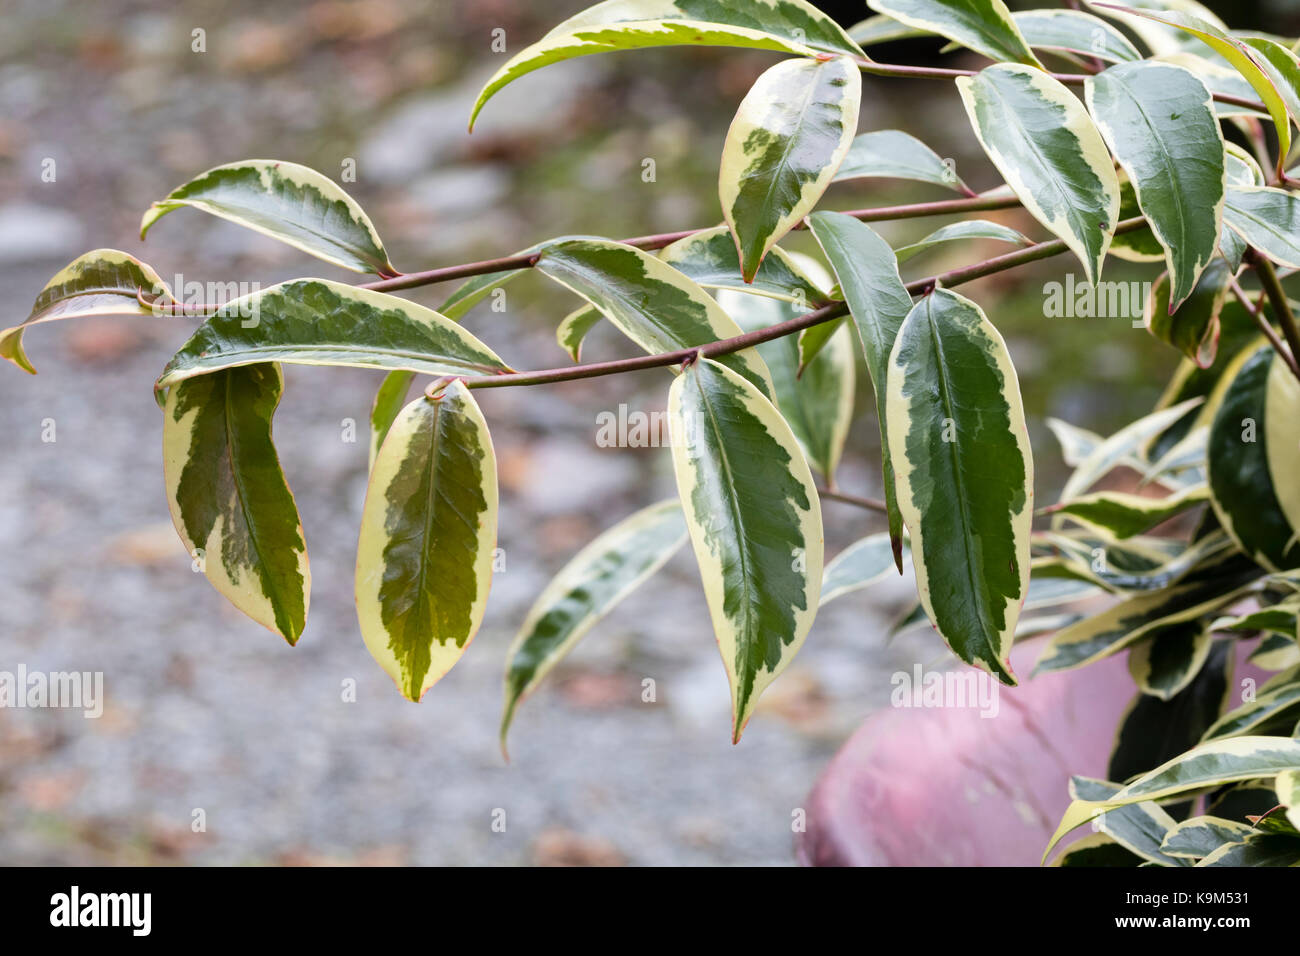 White margined variegation on the narrow evergreen leaves of the Japanese shrub, Cleyera fortunei 'Variegata' Stock Photo